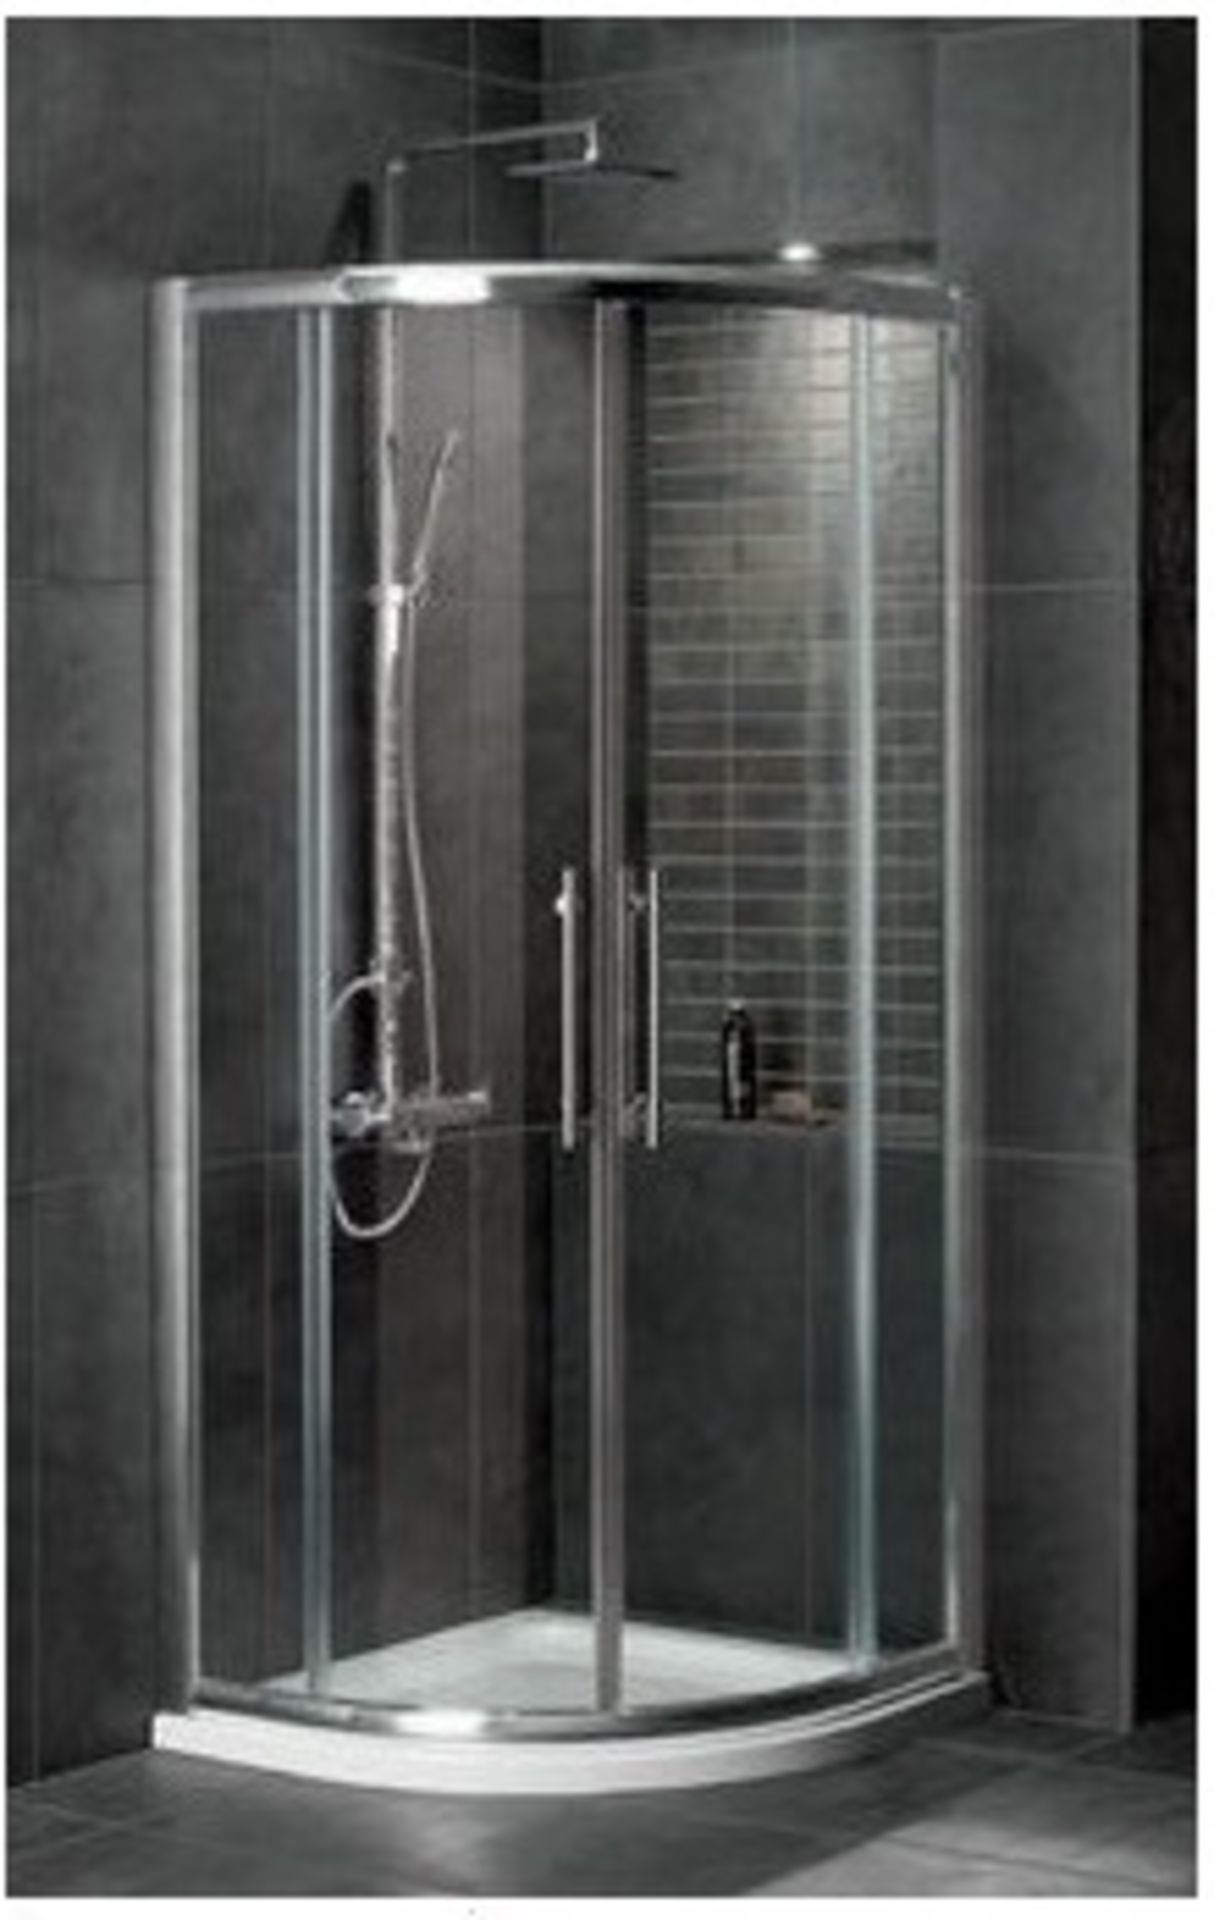 1 x Aqua Lotus 800mm Double Door Quad Shower Enclosure - Polished Chrome Finish - Chrome on Brass